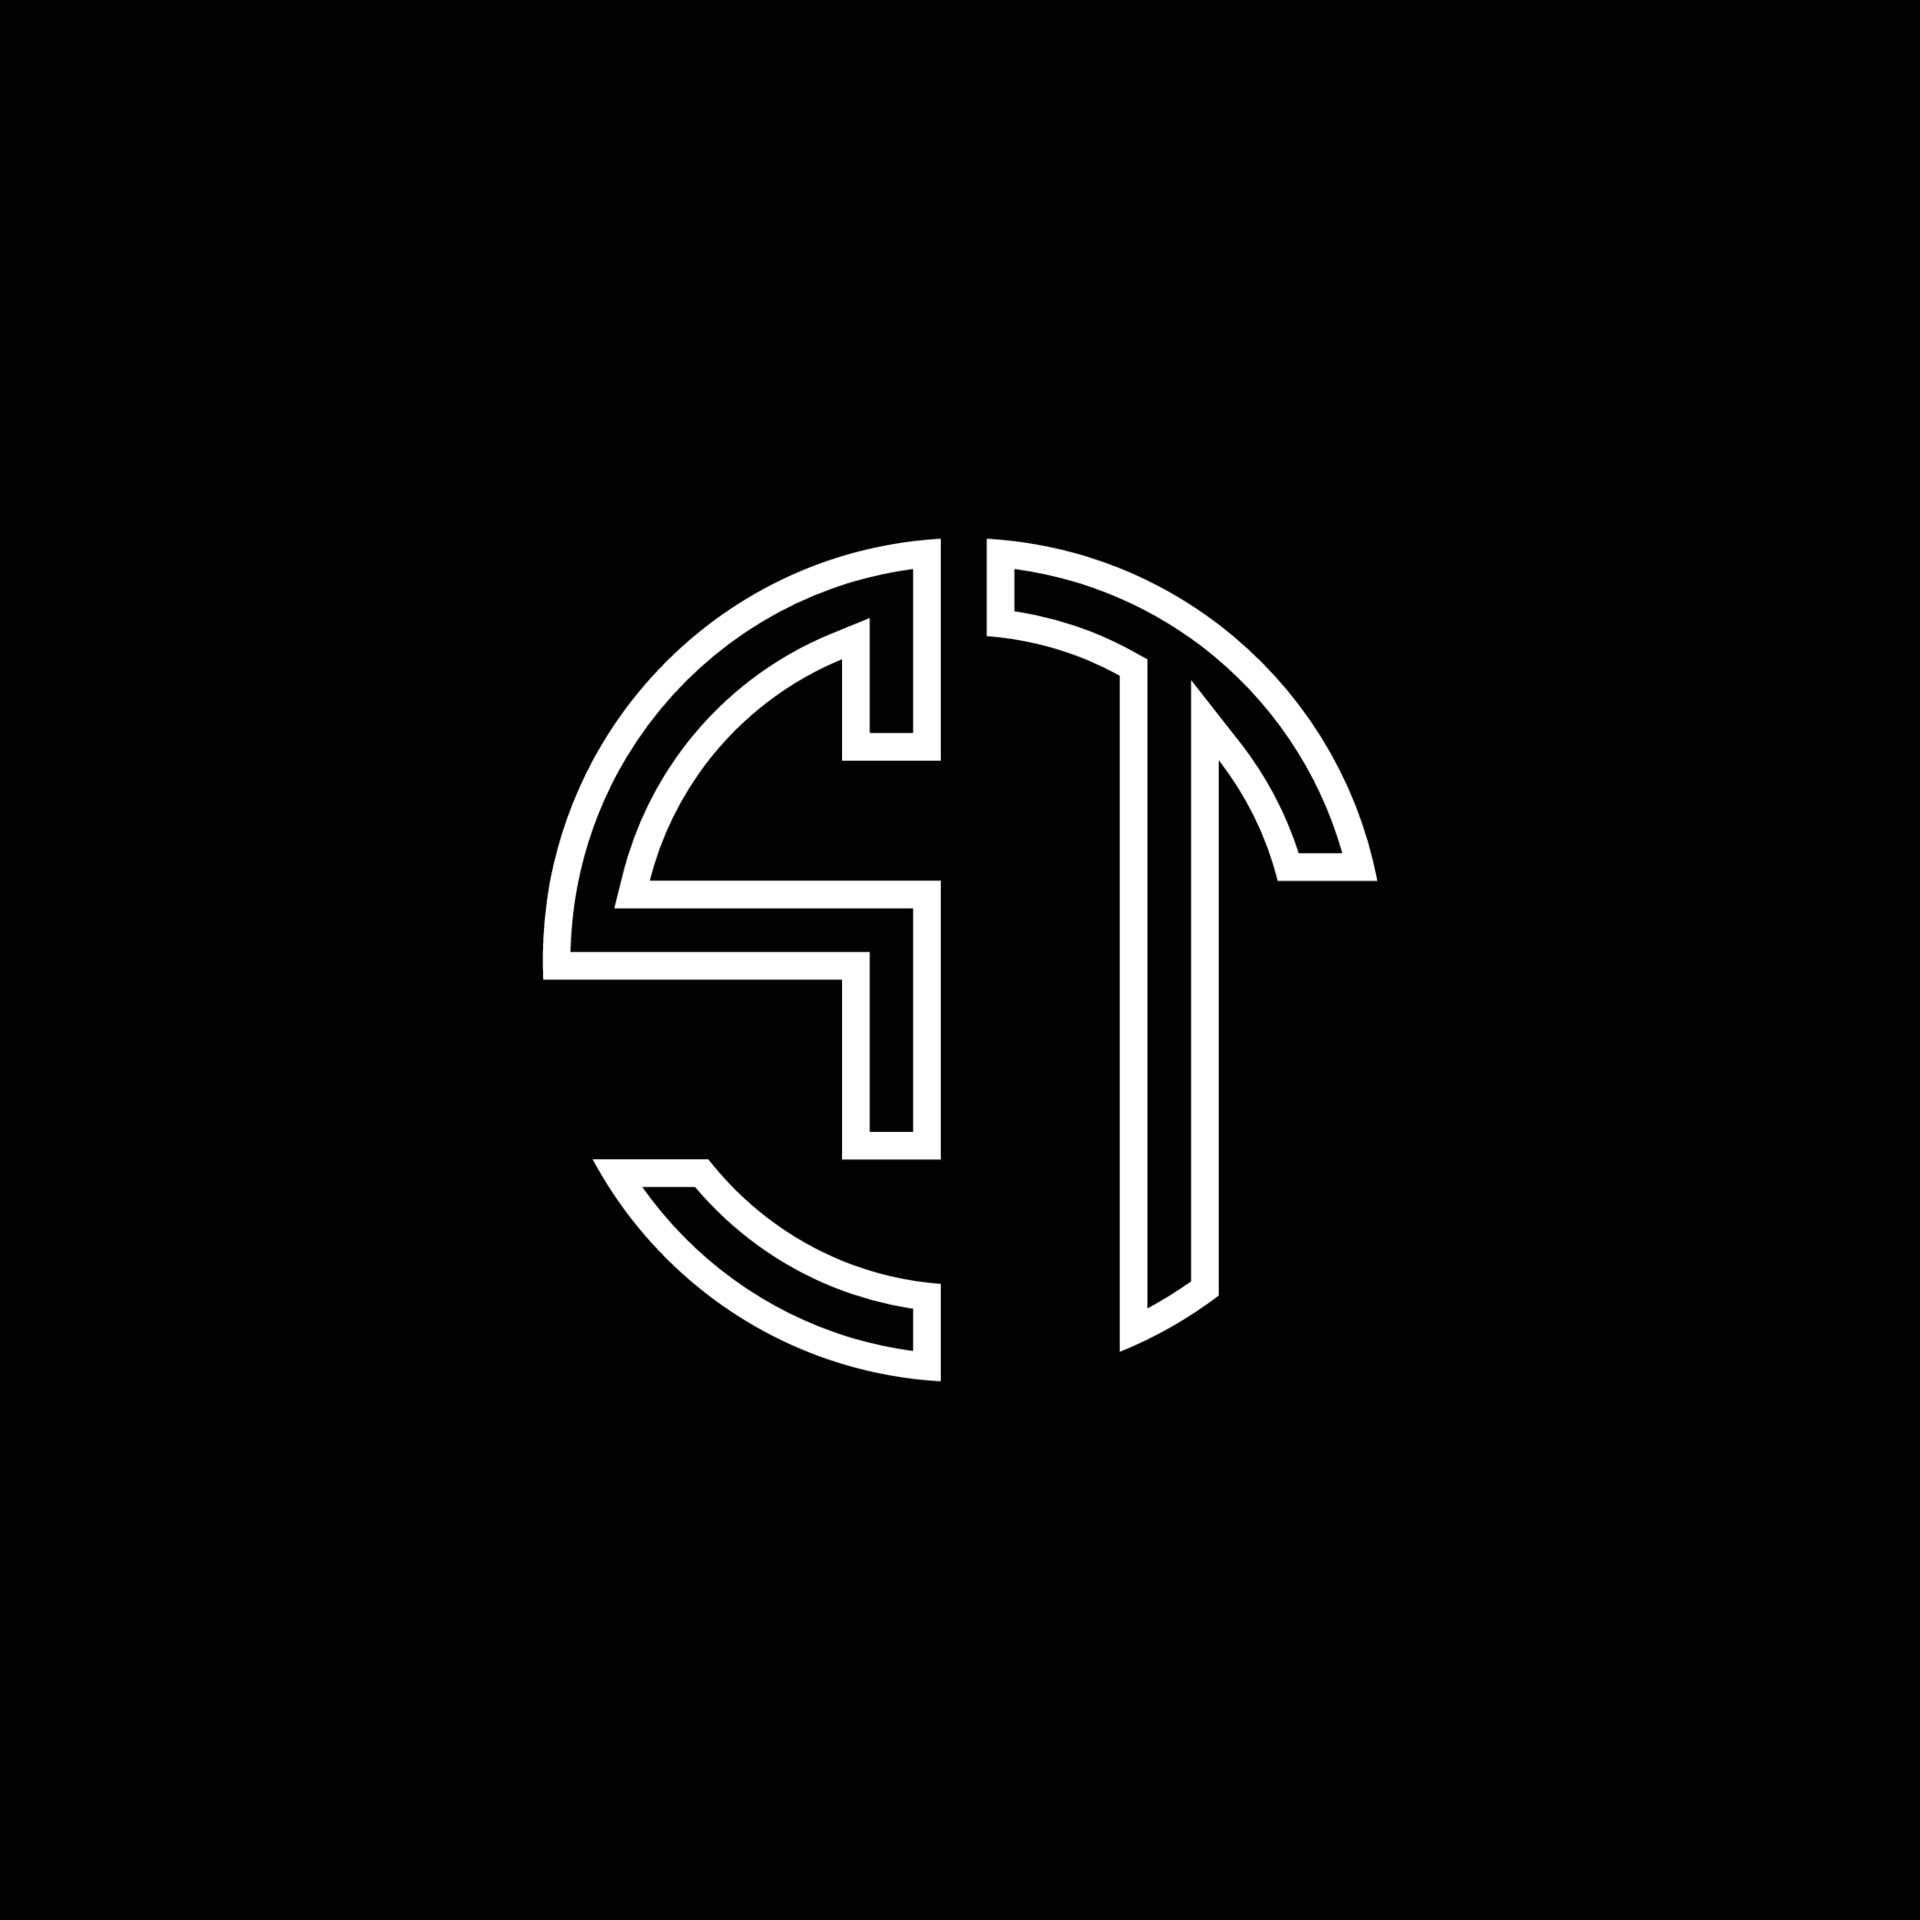 ST monogram logo circle ribbon style outline design template 4206052 ...